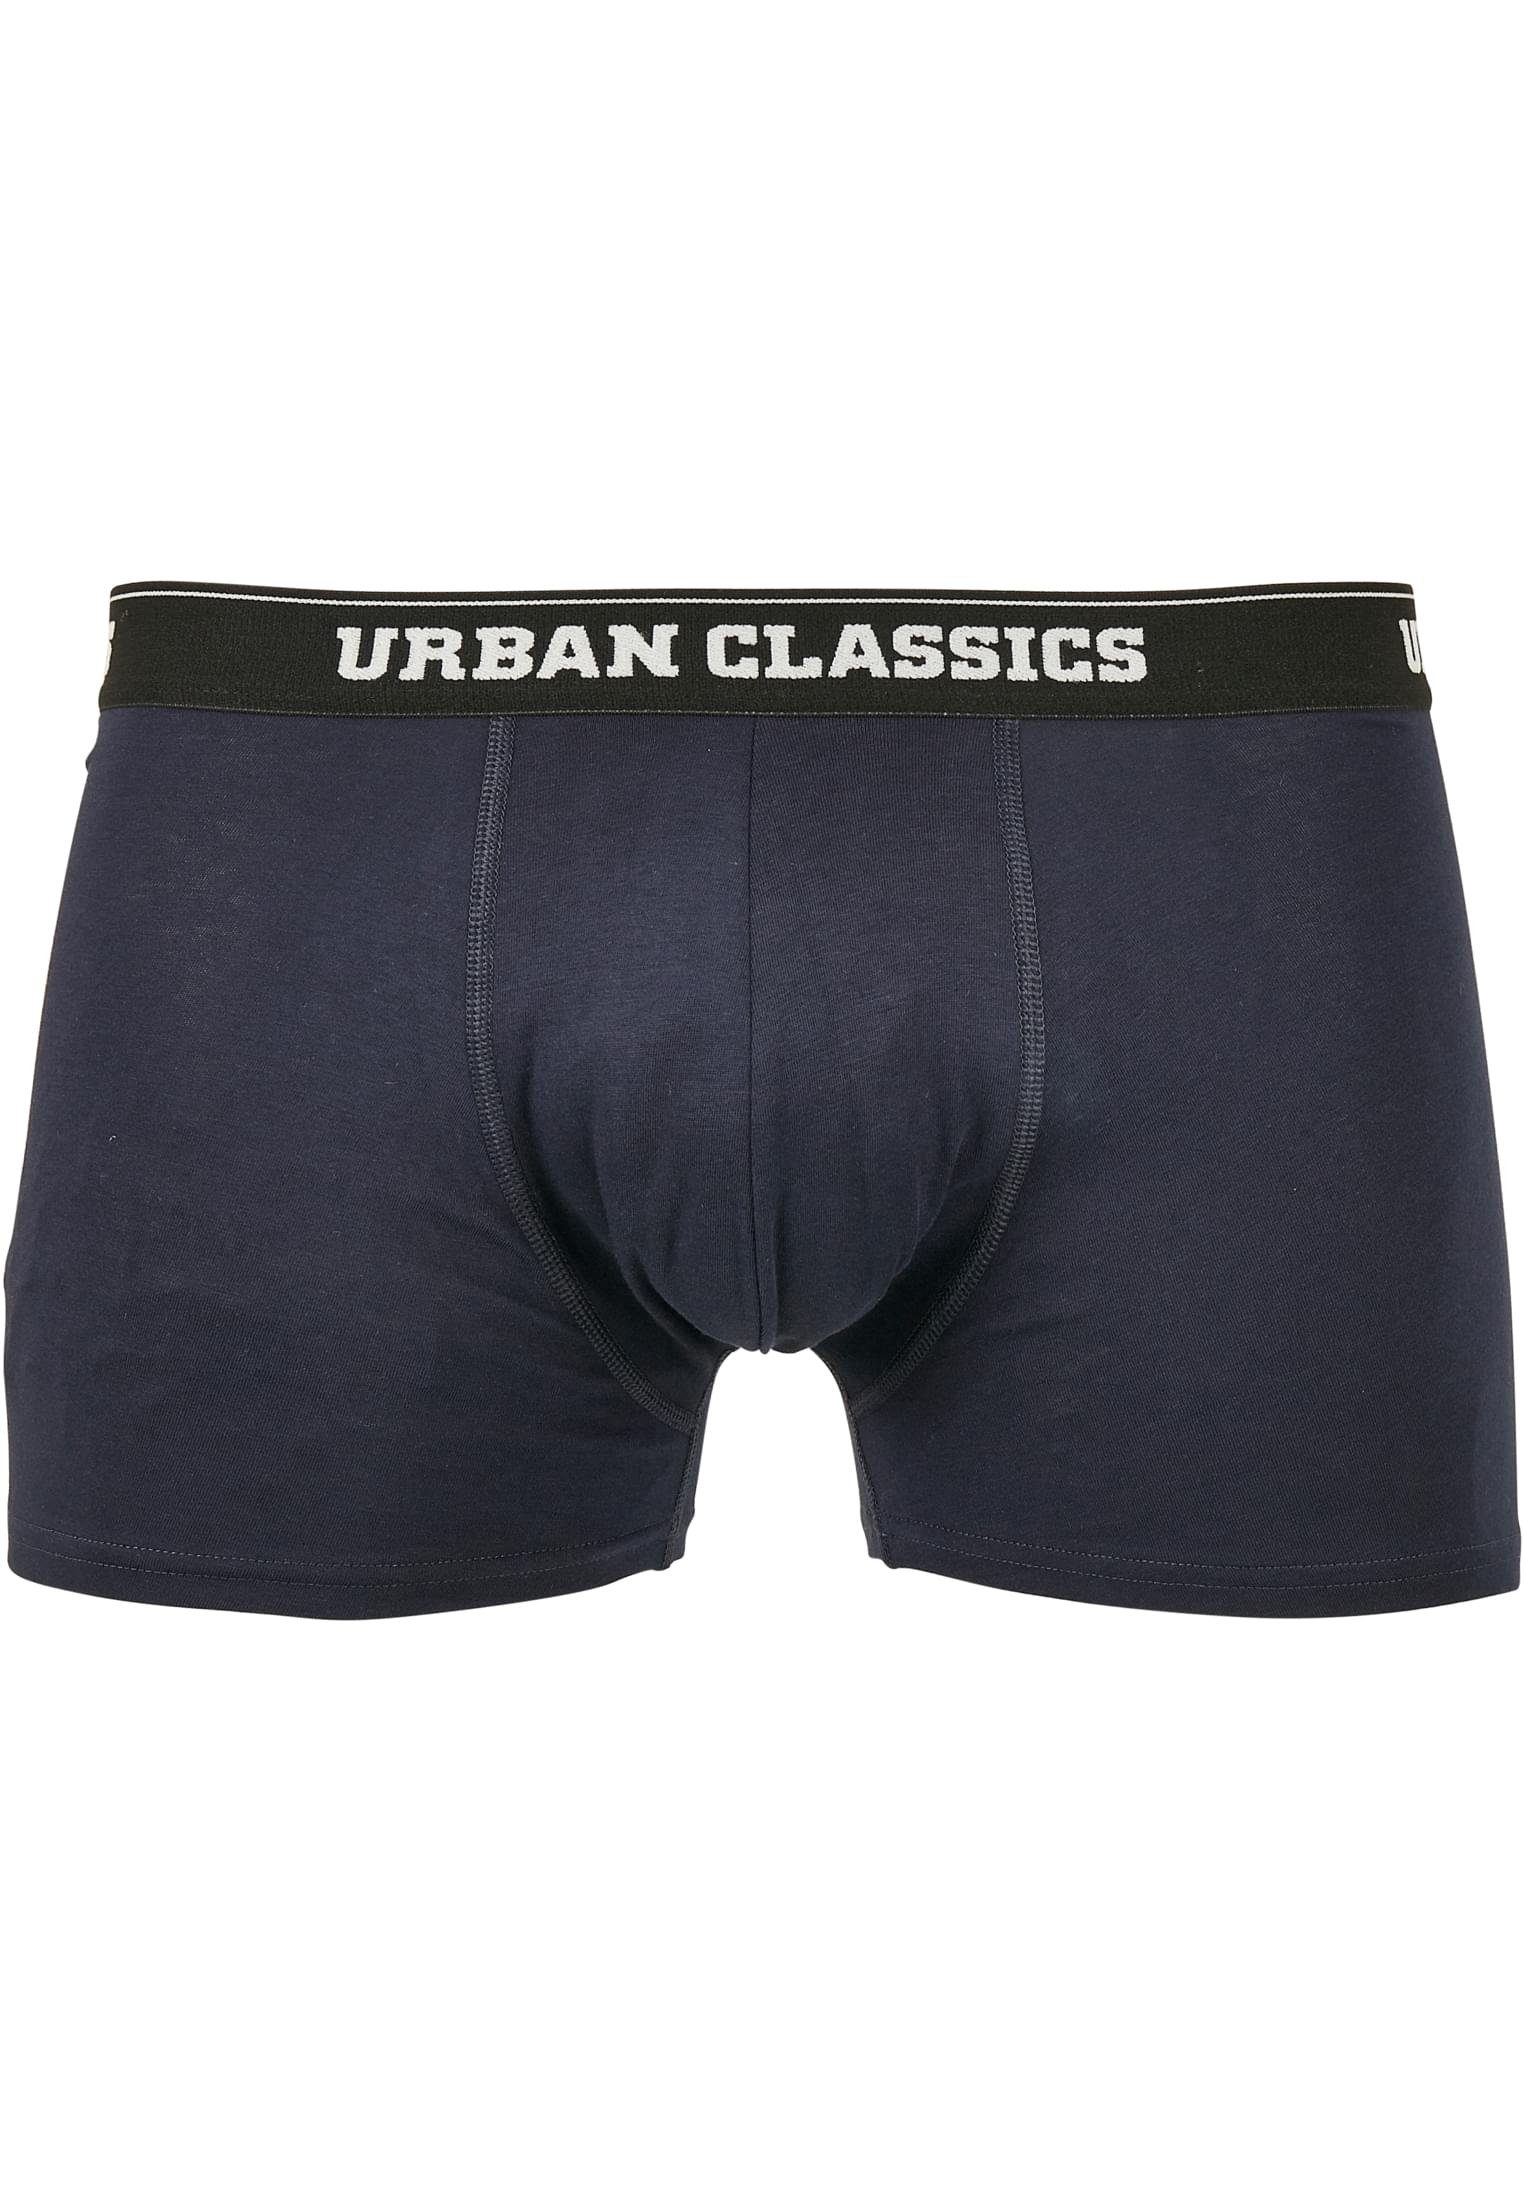 Herren URBAN Boxer 3-Pack Organic (1-St) CLASSICS white/navy/black Shorts Boxershorts